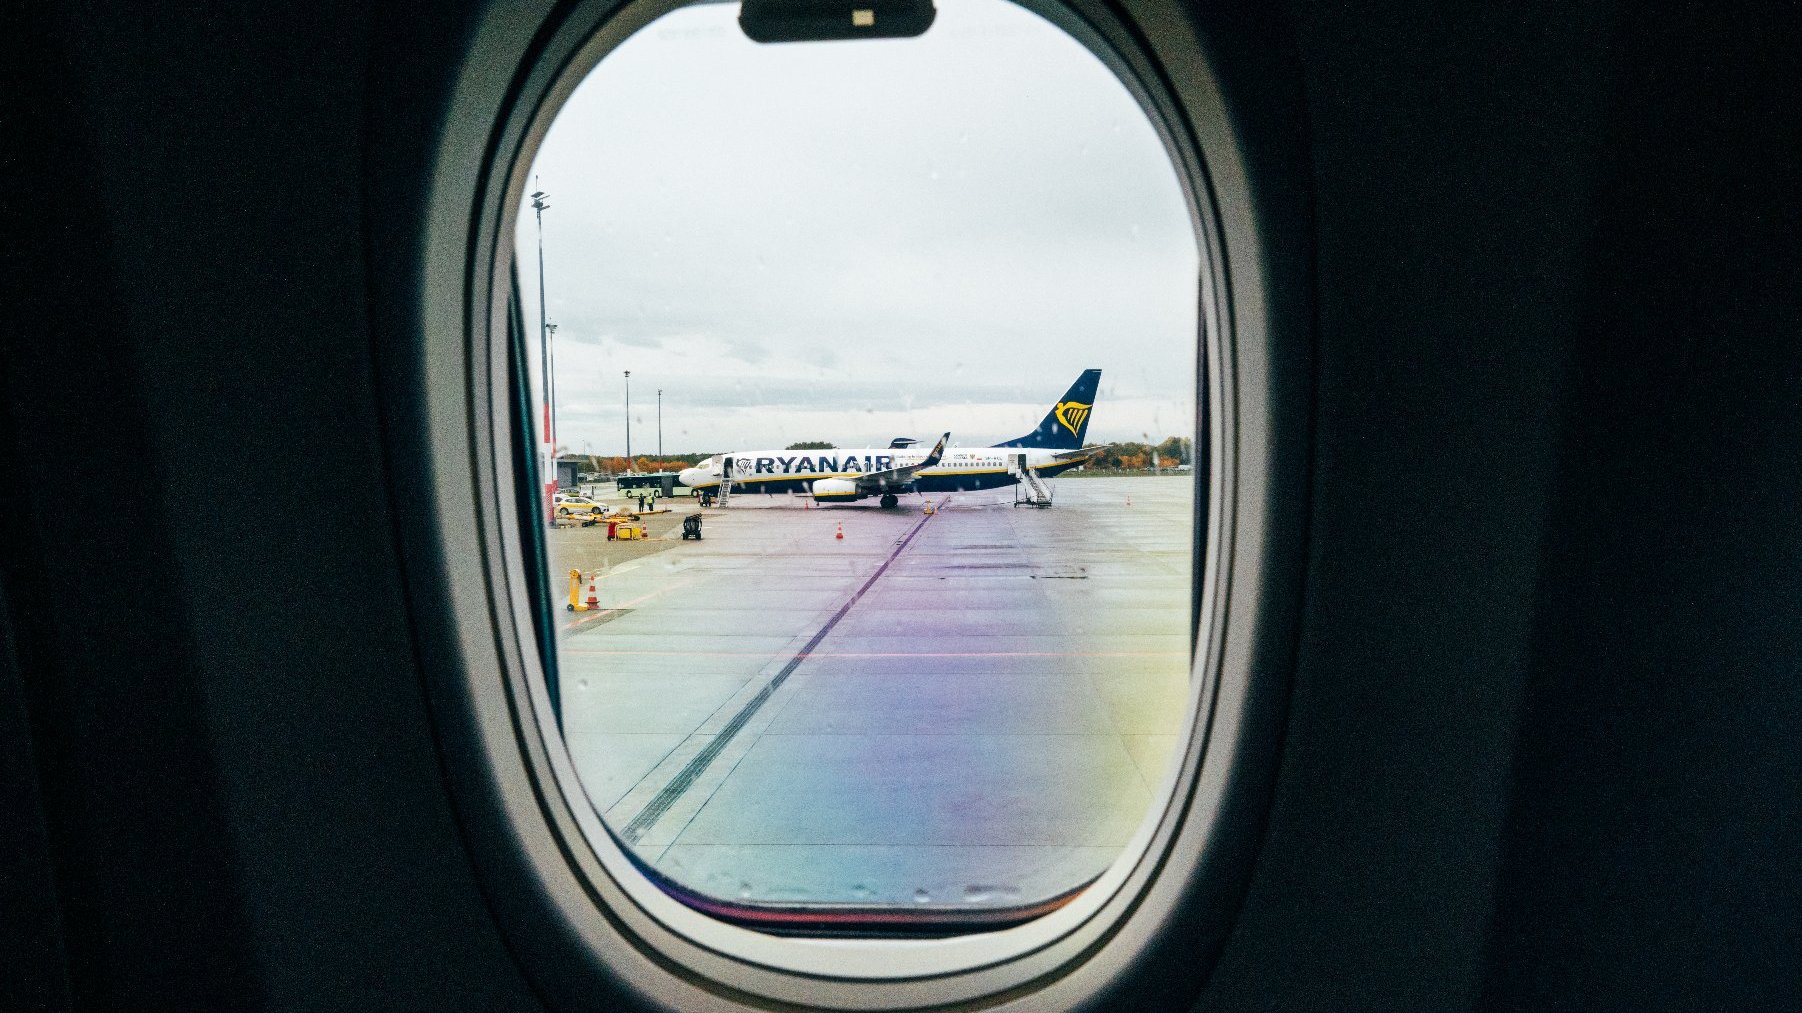 Widok z okna samolot na inny samolot stojący na lotnisku Ławica